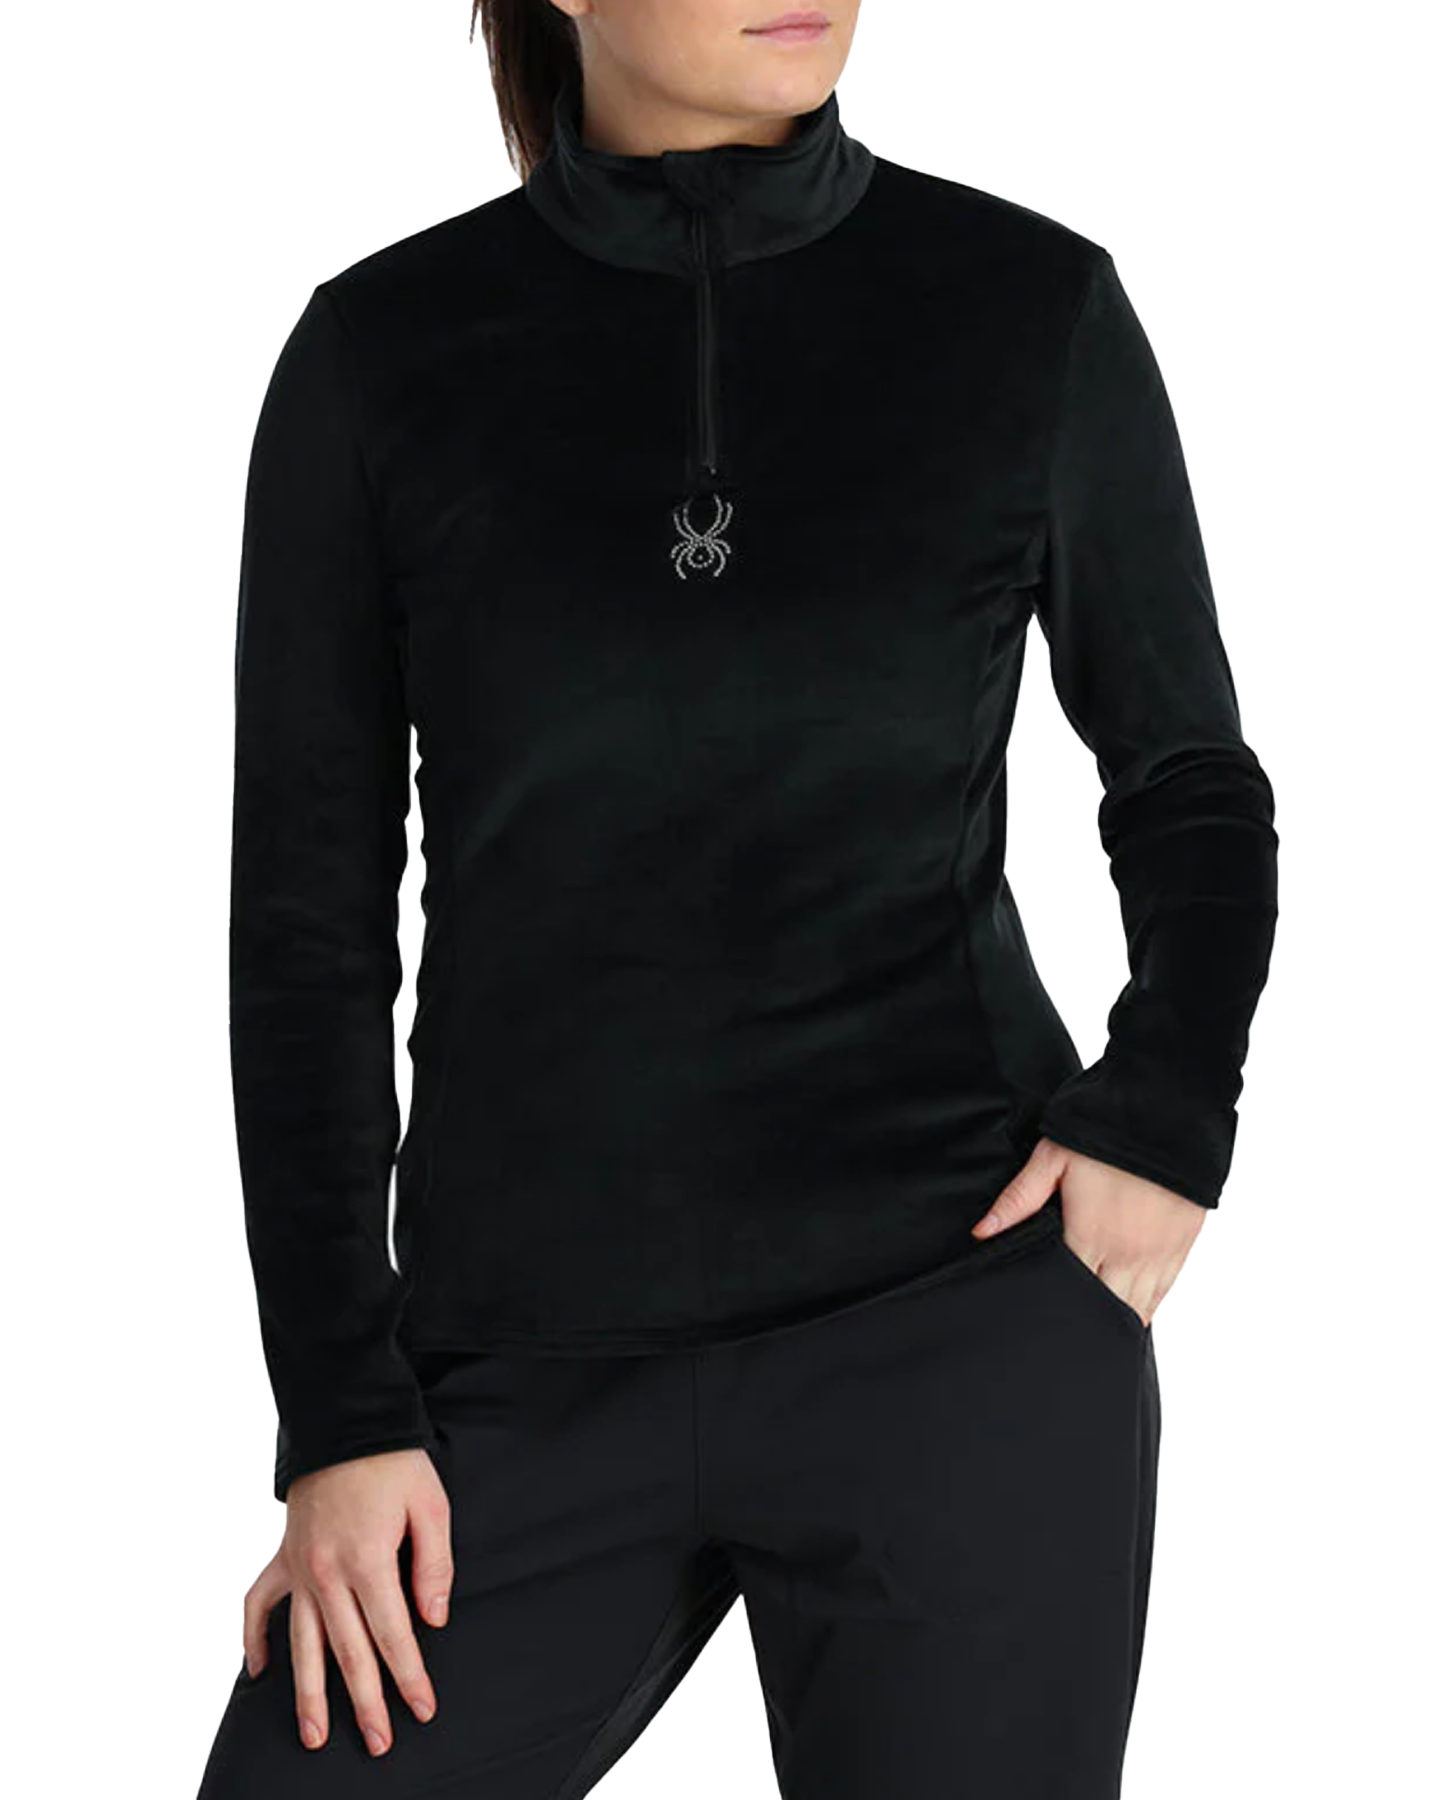 Spyder Women's Shimmer Bug Half Zip - Black Hoodies & Sweatshirts - SnowSkiersWarehouse